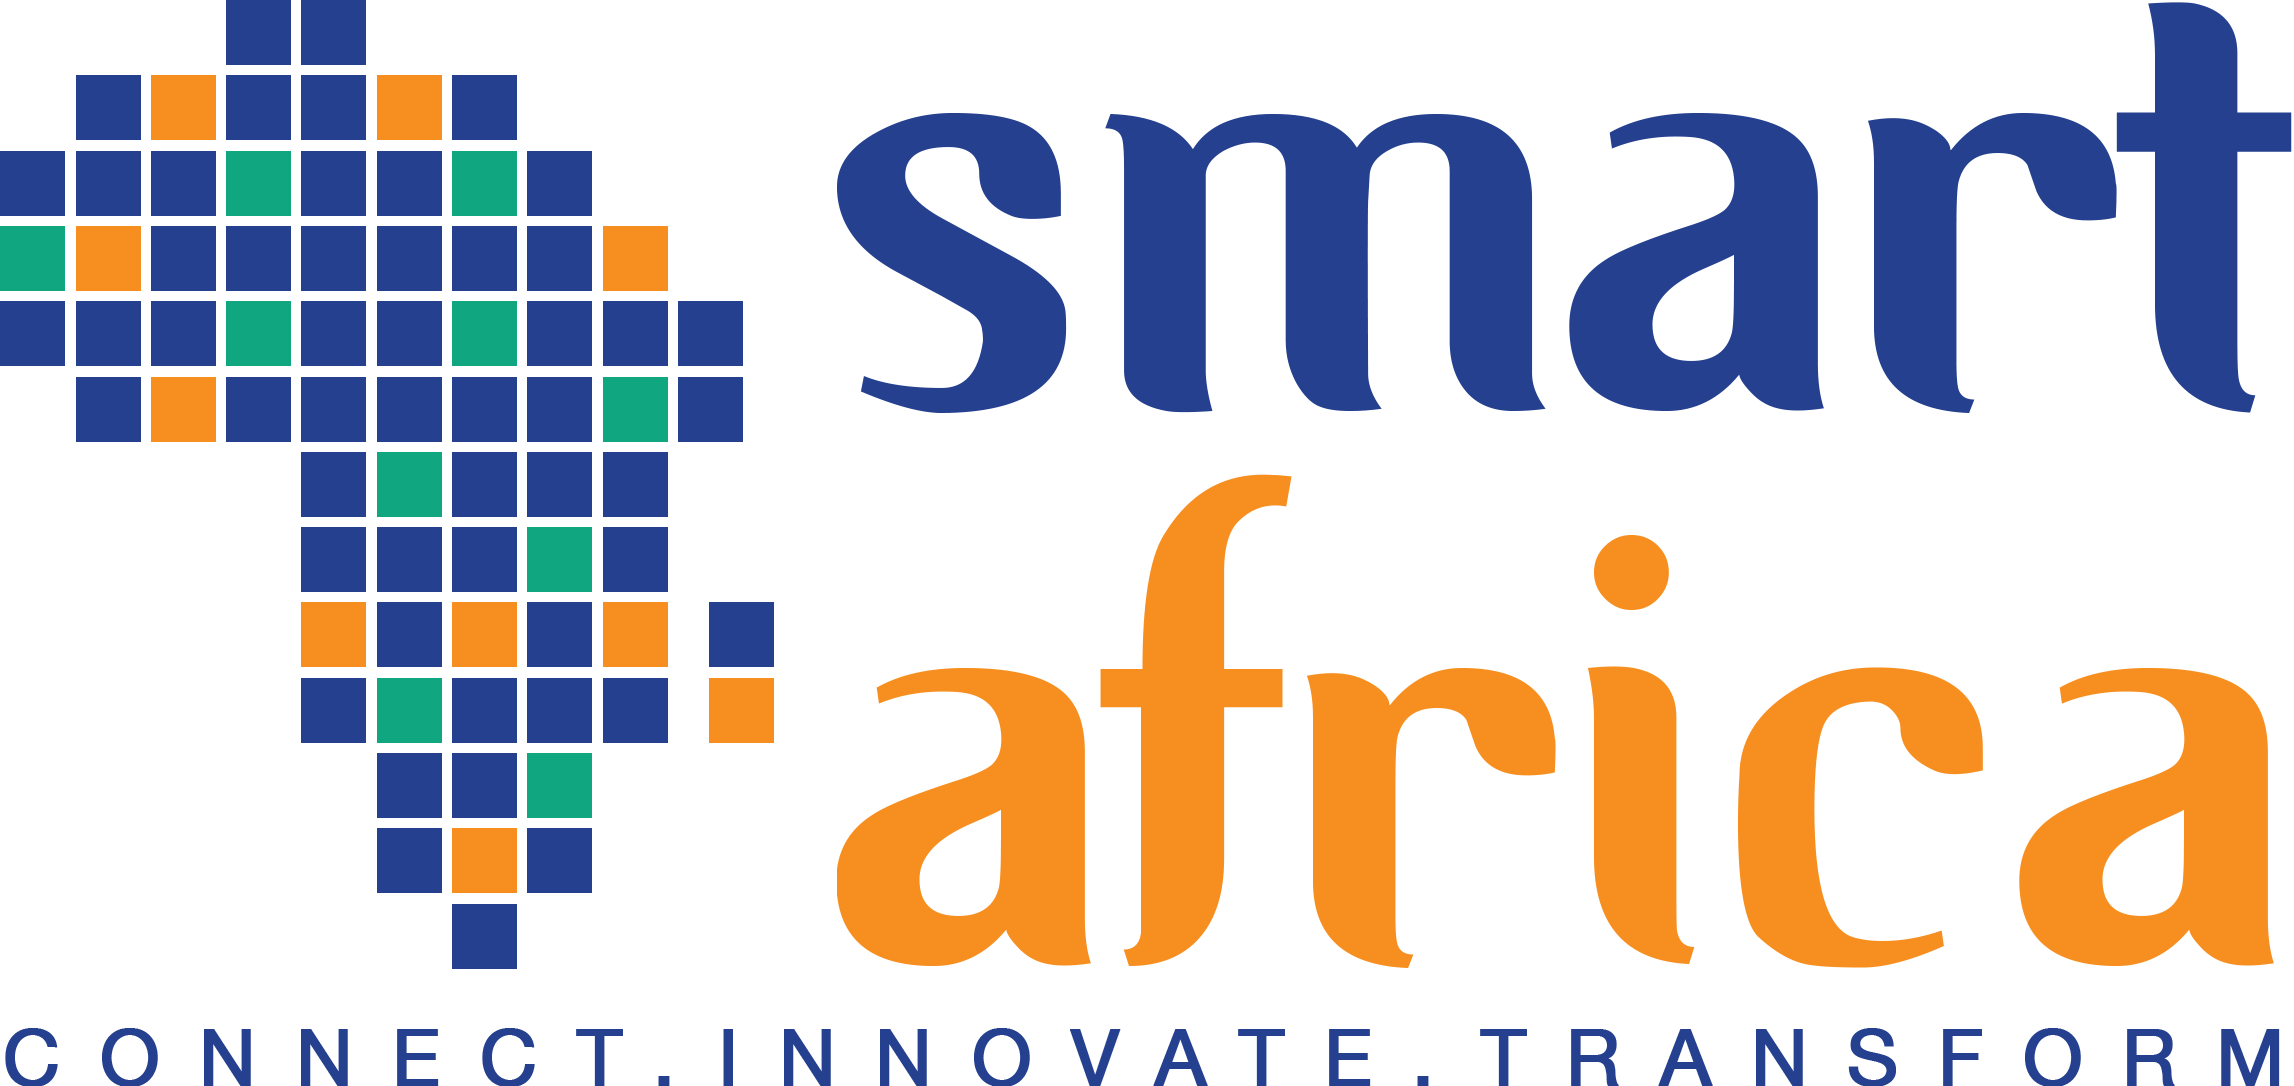 Smart Africa logo